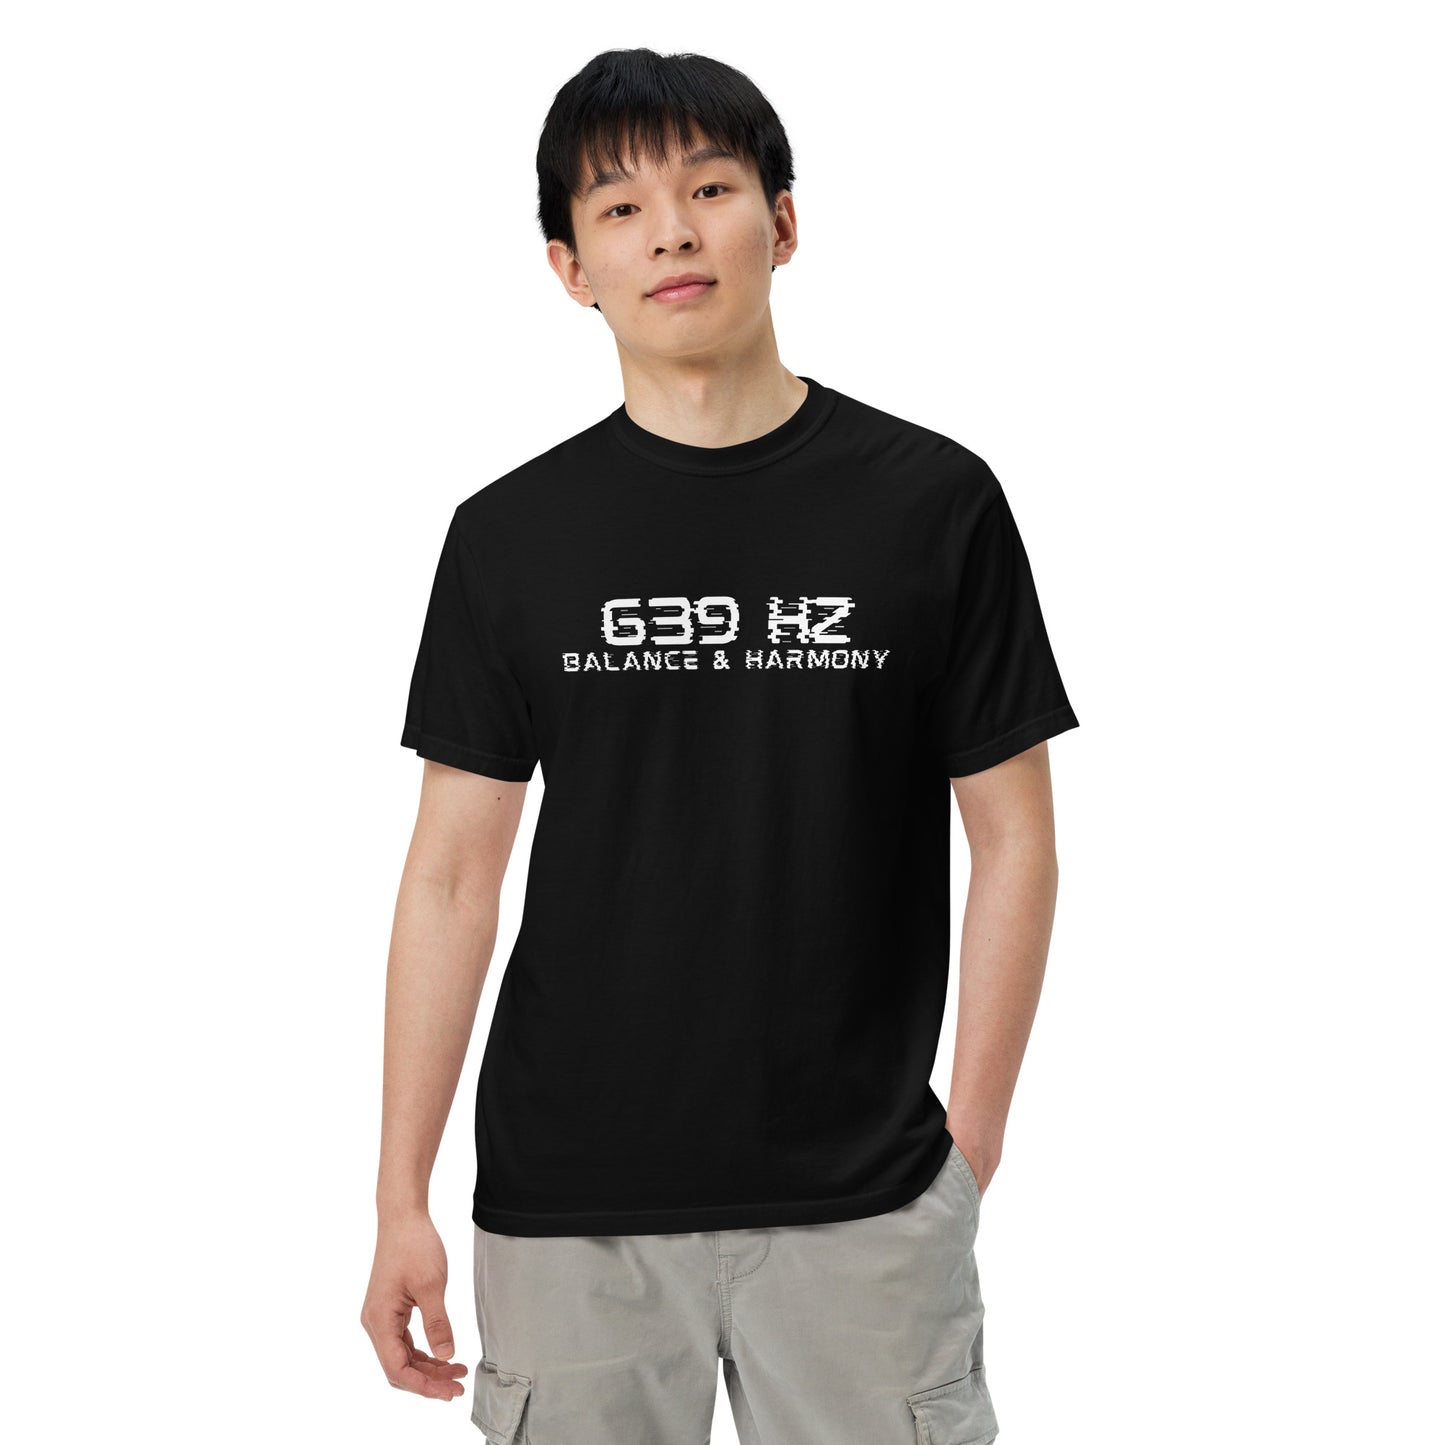 639 Hz Balance & Harmony Men’s garment-dyed heavyweight t-shirt